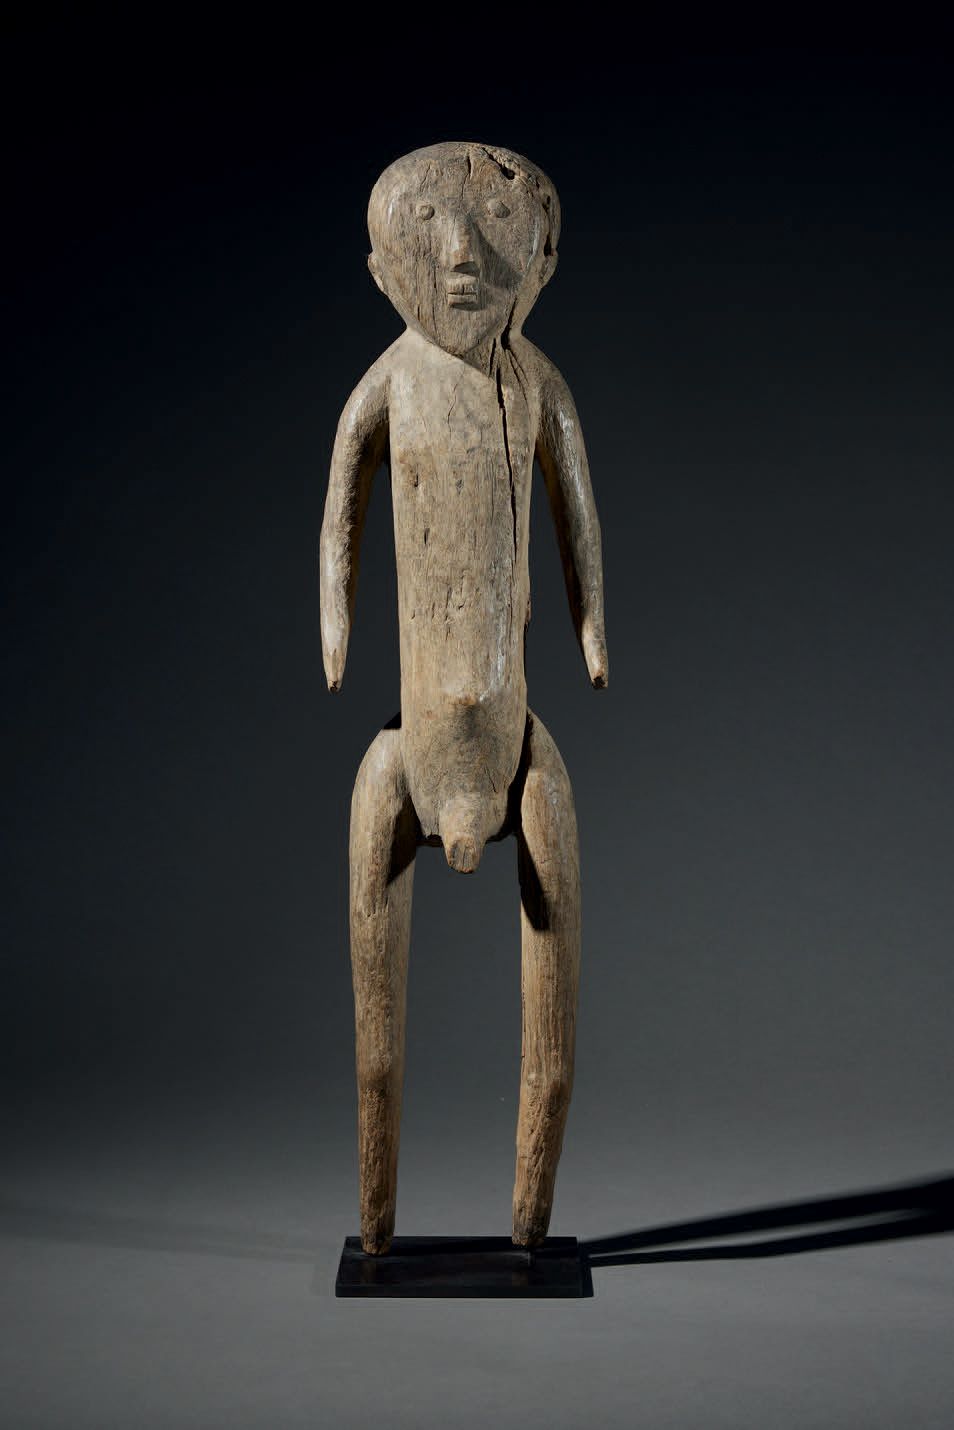 Null Gurmanche雕像
布基纳法索
木头
高58.5厘米
一个大型的象形雕像，是一个站立的男性形象，他的手臂从身体上伸出来。伤痕累累的面部表情引人注目&hellip;